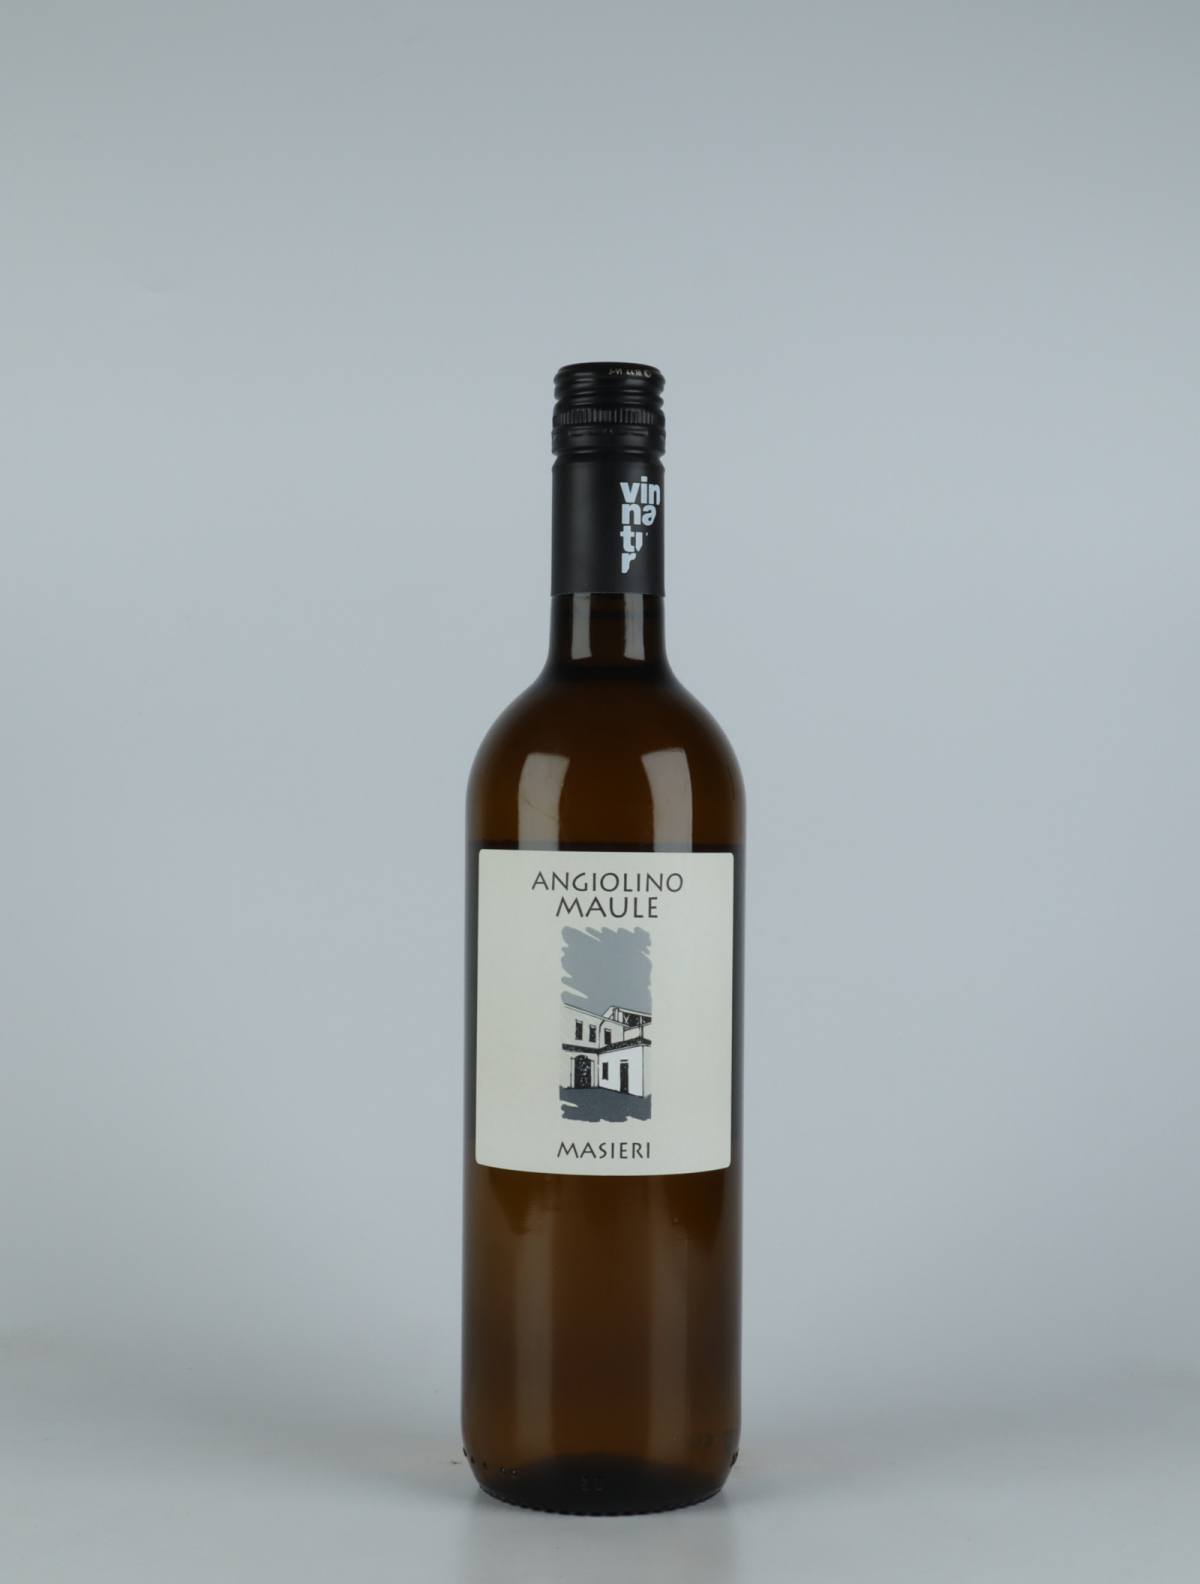 En flaske 2021 Masieri Hvidvin fra La Biancara di Angiolino Maule, Veneto i Italien